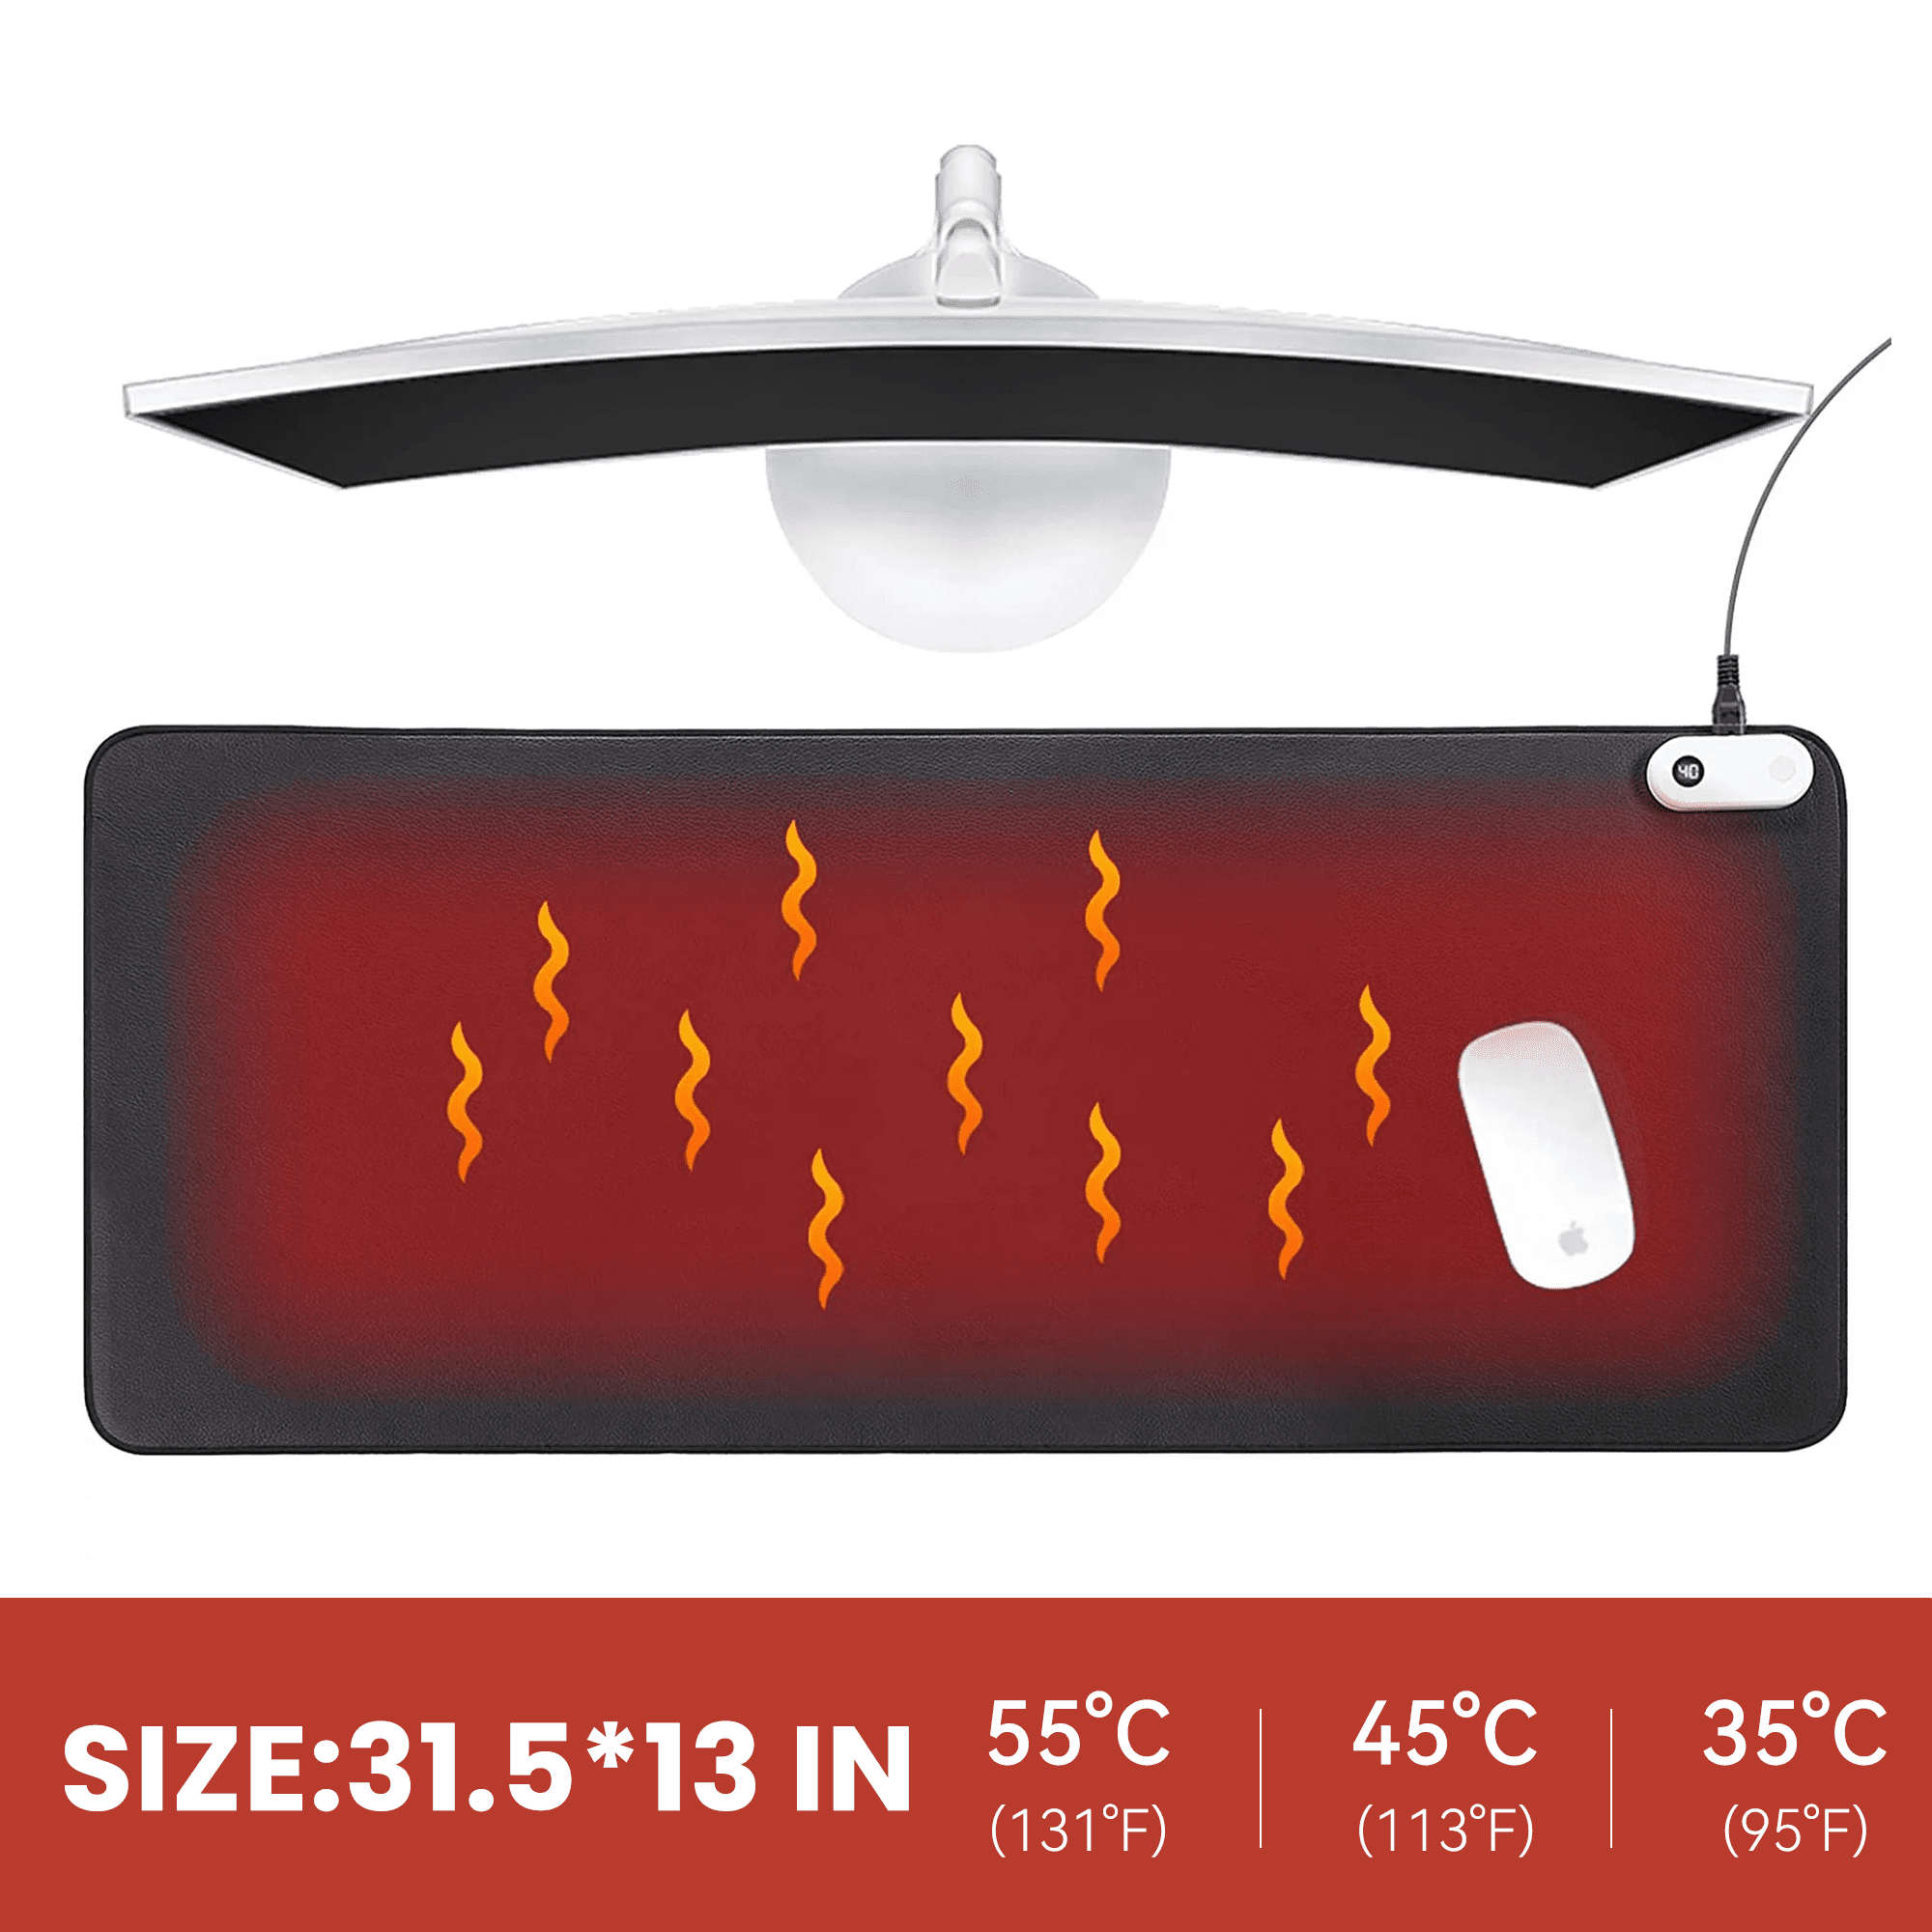 Heated Desk Pad Black - Heated Desk Mat - Warm Desk Pad - 3 Levels Heating & 4 Hours Auto Shut-Off, PU Leather Mouse Pad - 31.5 x 13 inch(Black)